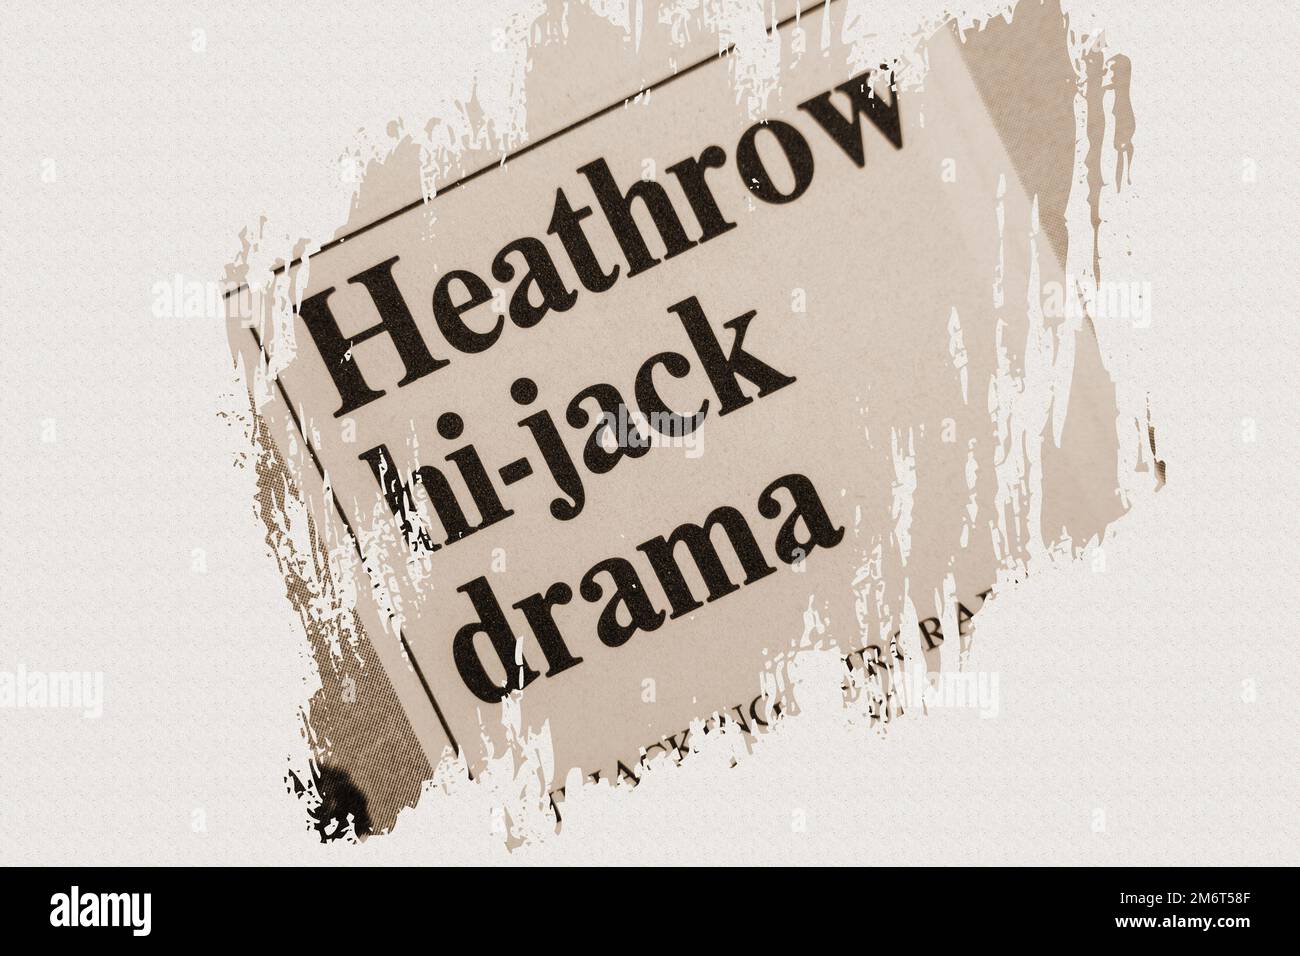 news story from 1975 newspaper headline article title - Heathrow hi-jack drama in sepia Stock Photo